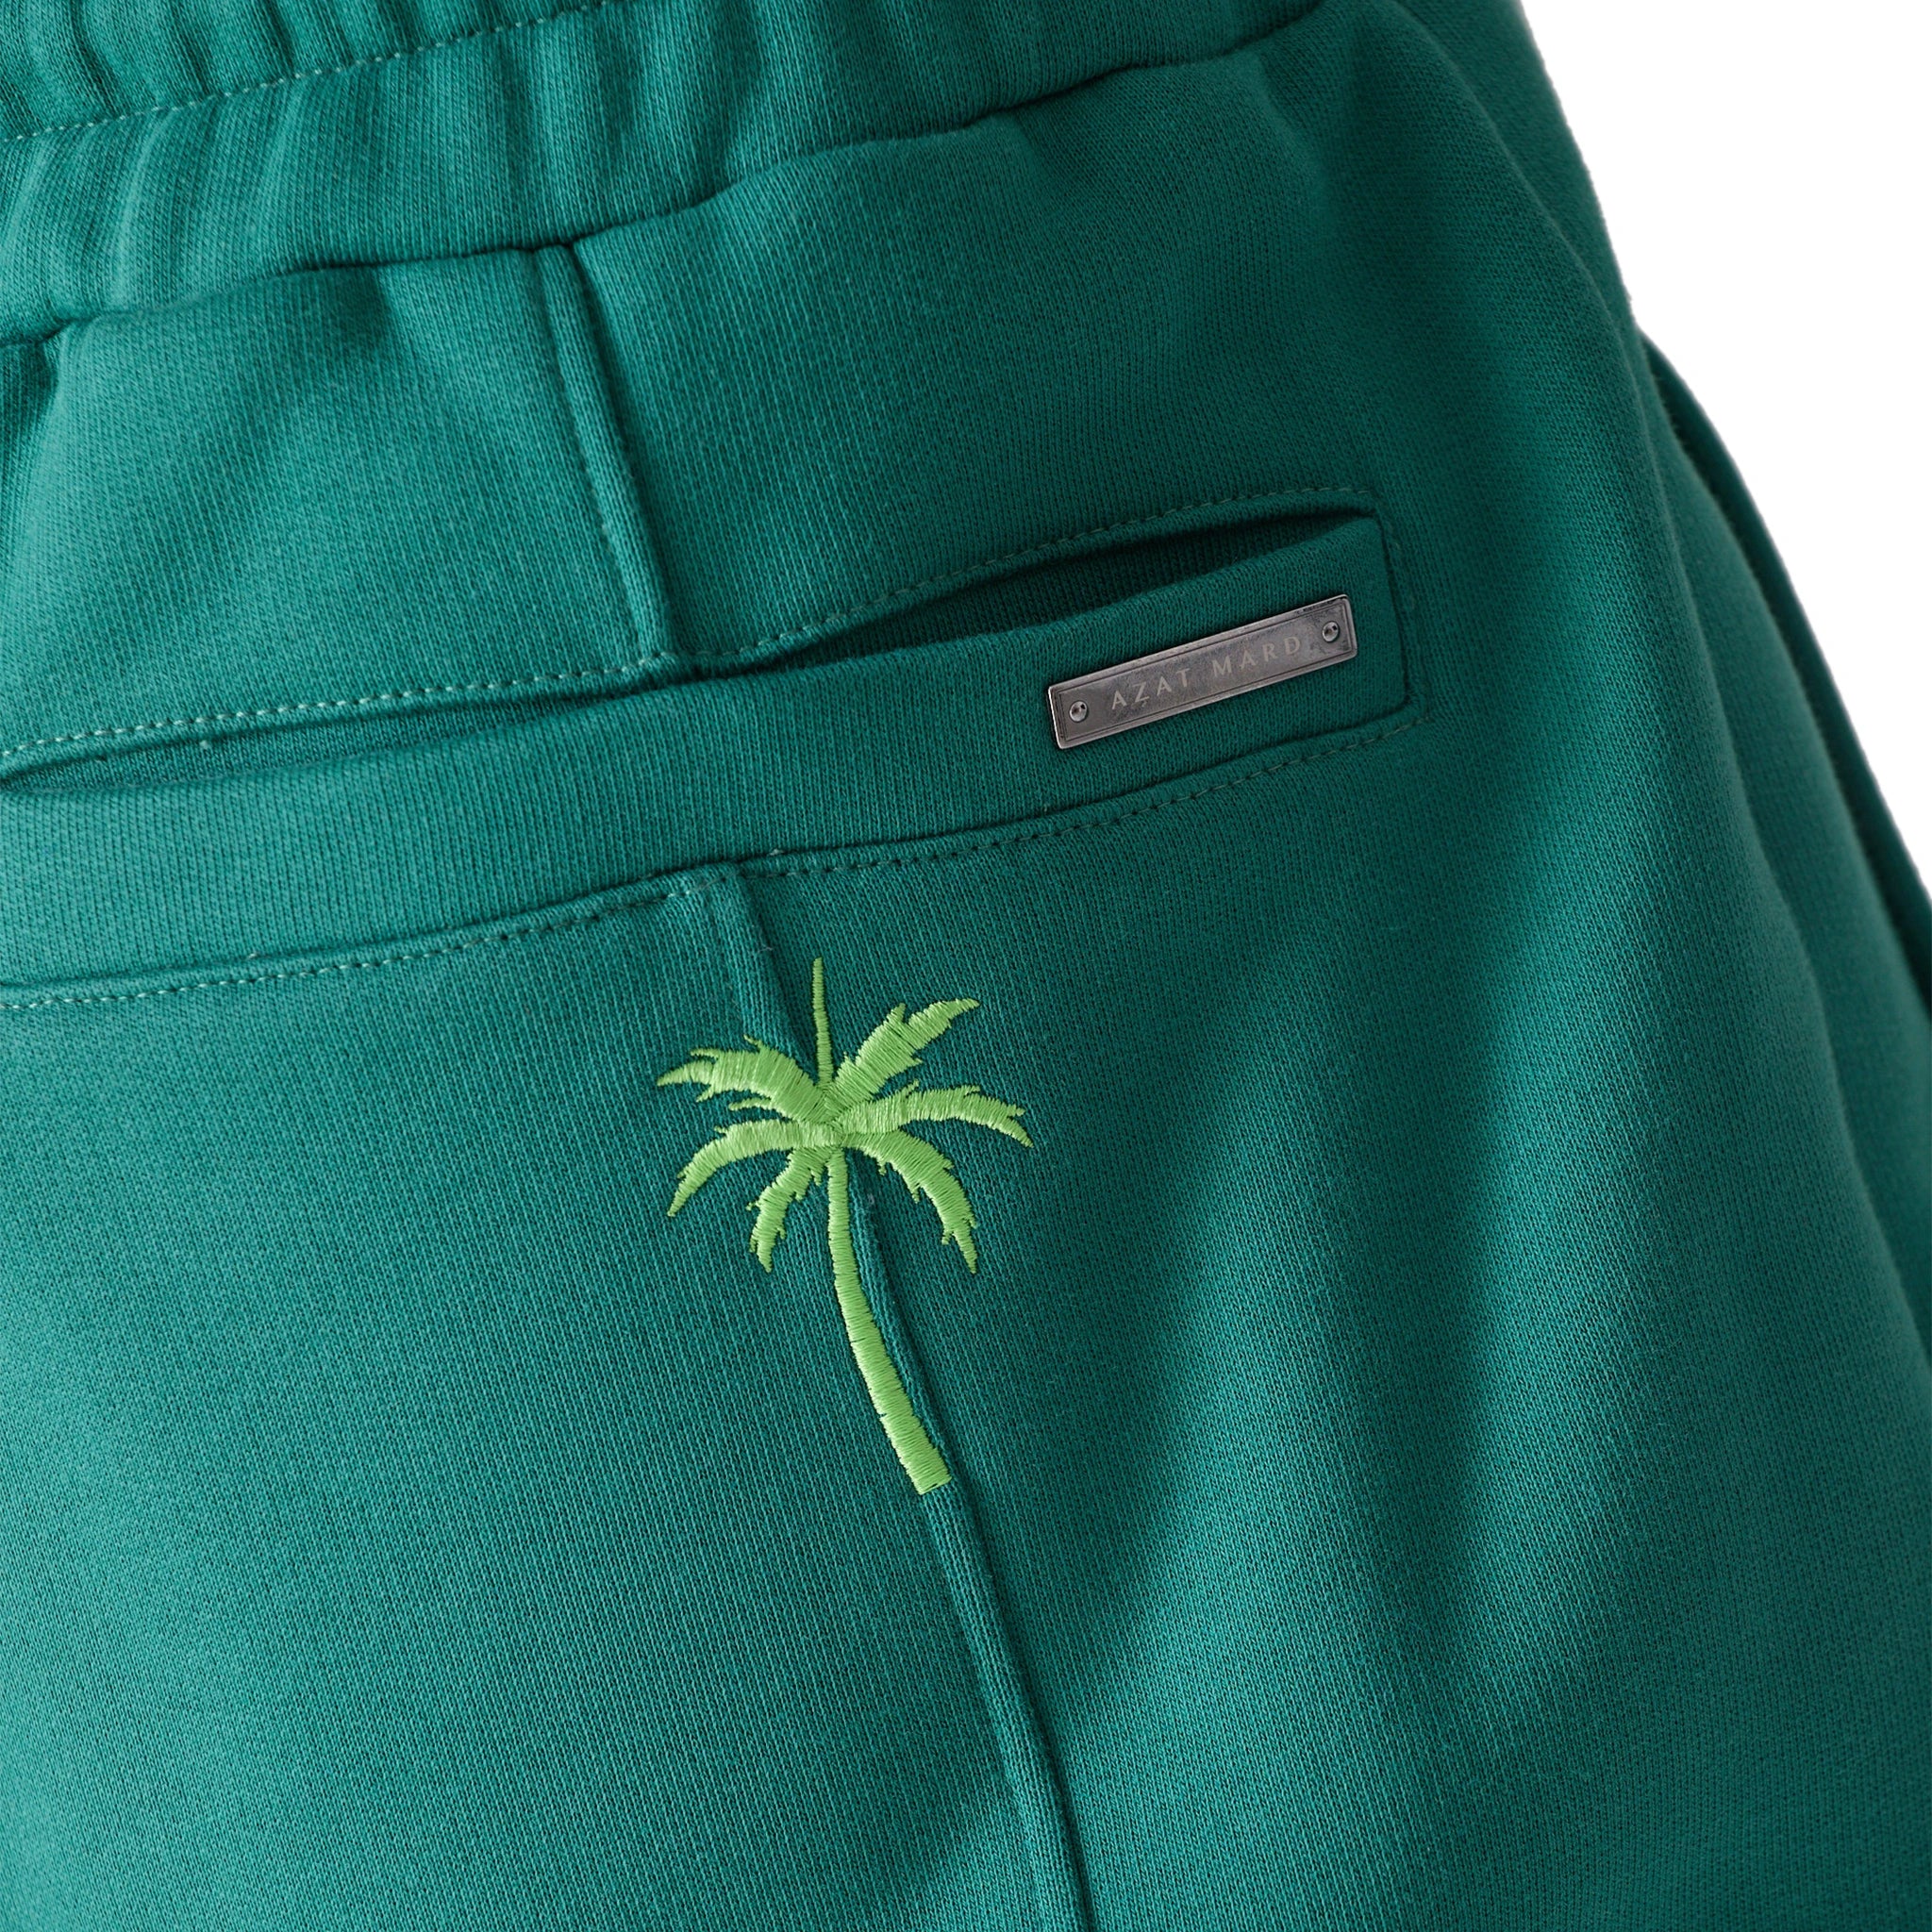 Back pocket View of Azat Mard Country Club Green Sweatpants